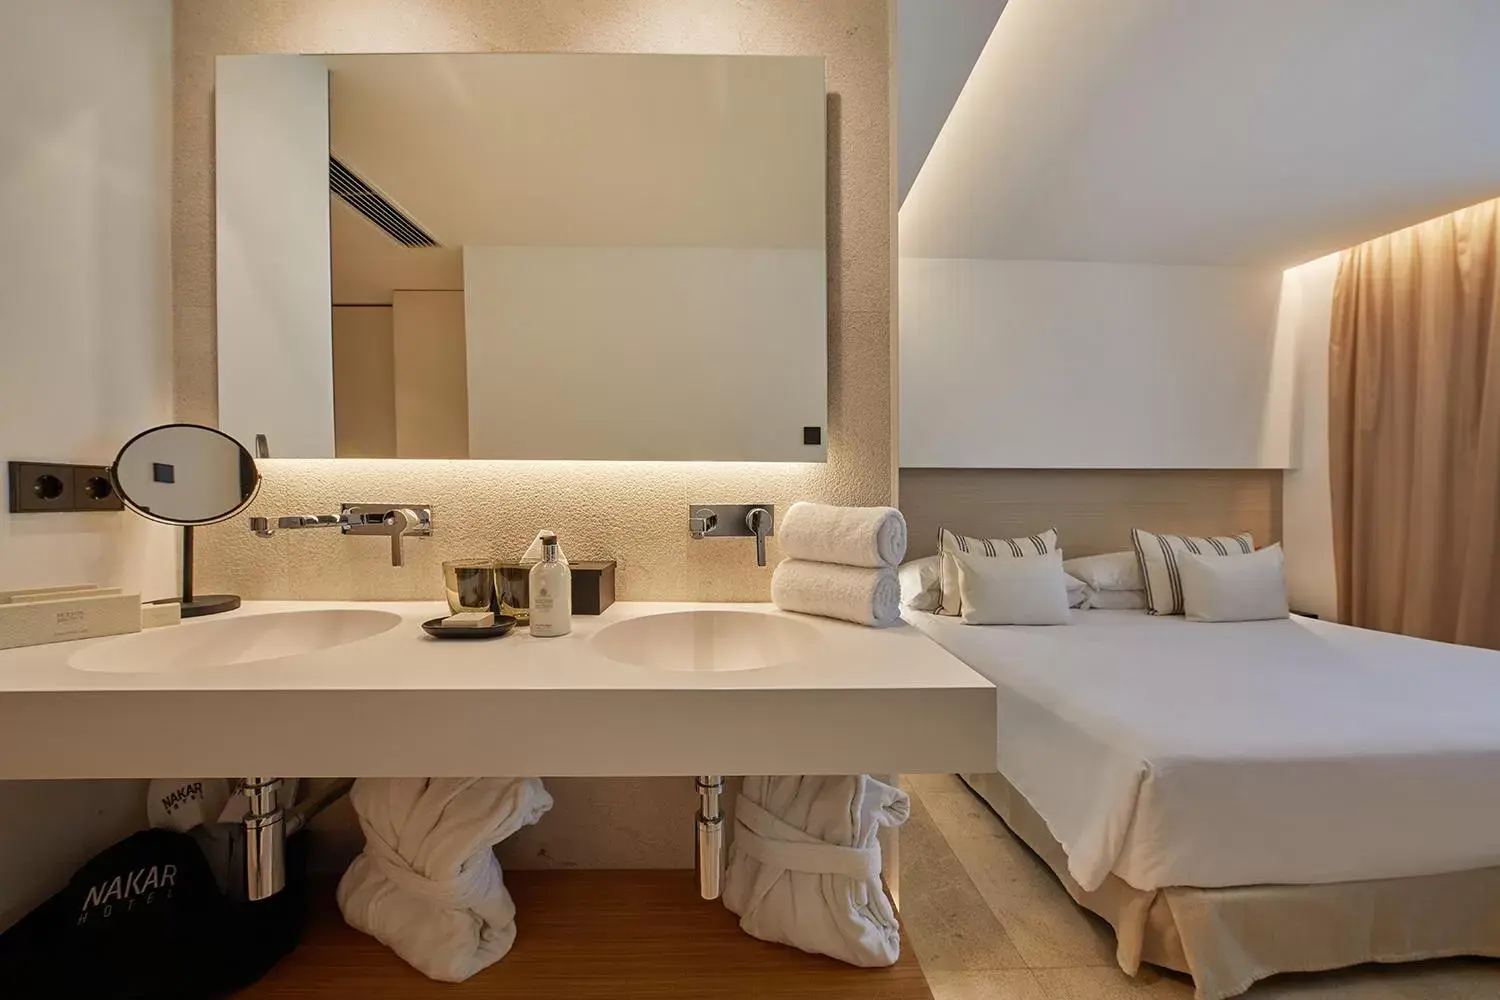 Photo of the whole room, Bathroom in Nakar Hotel